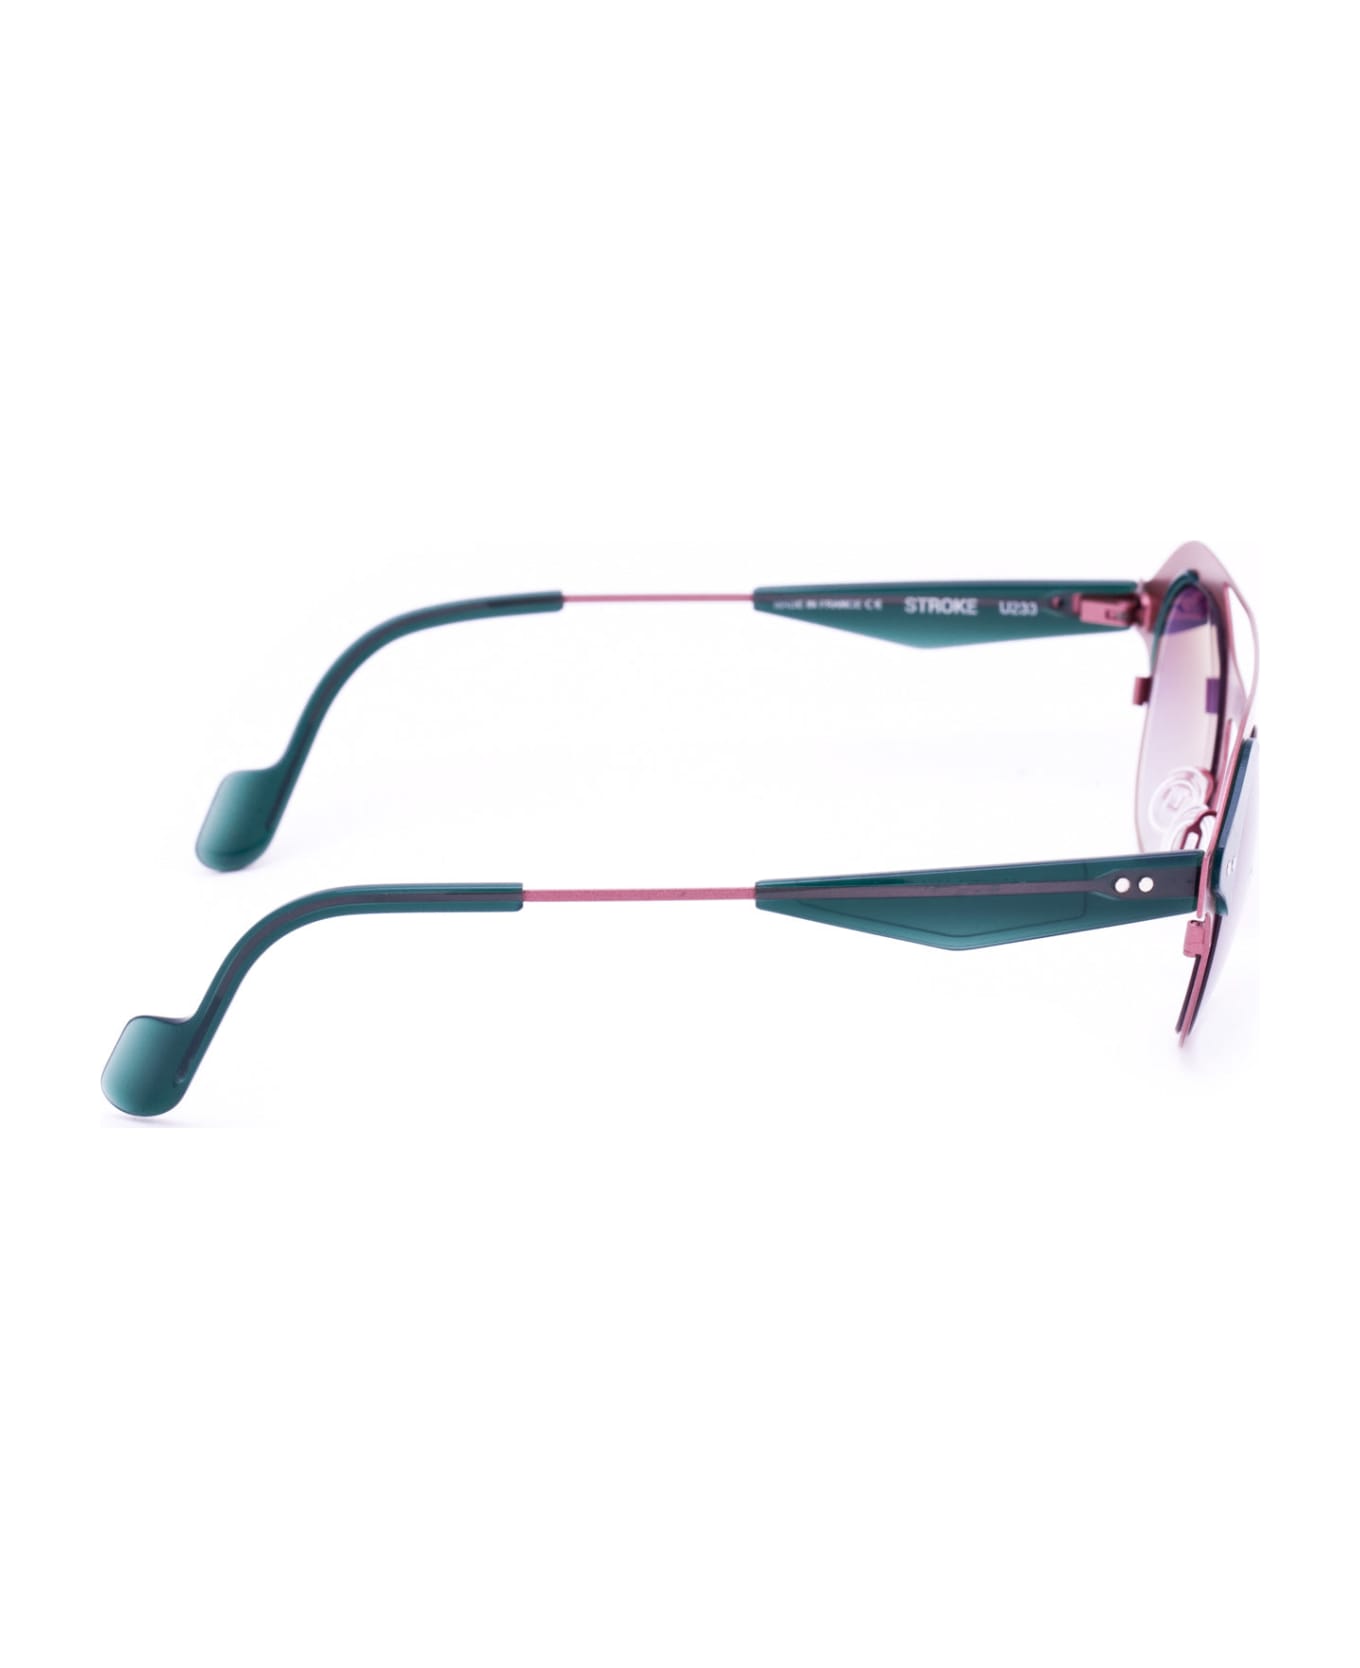 Anne & Valentin Stroke-u233 Sunglasses - pink サングラス